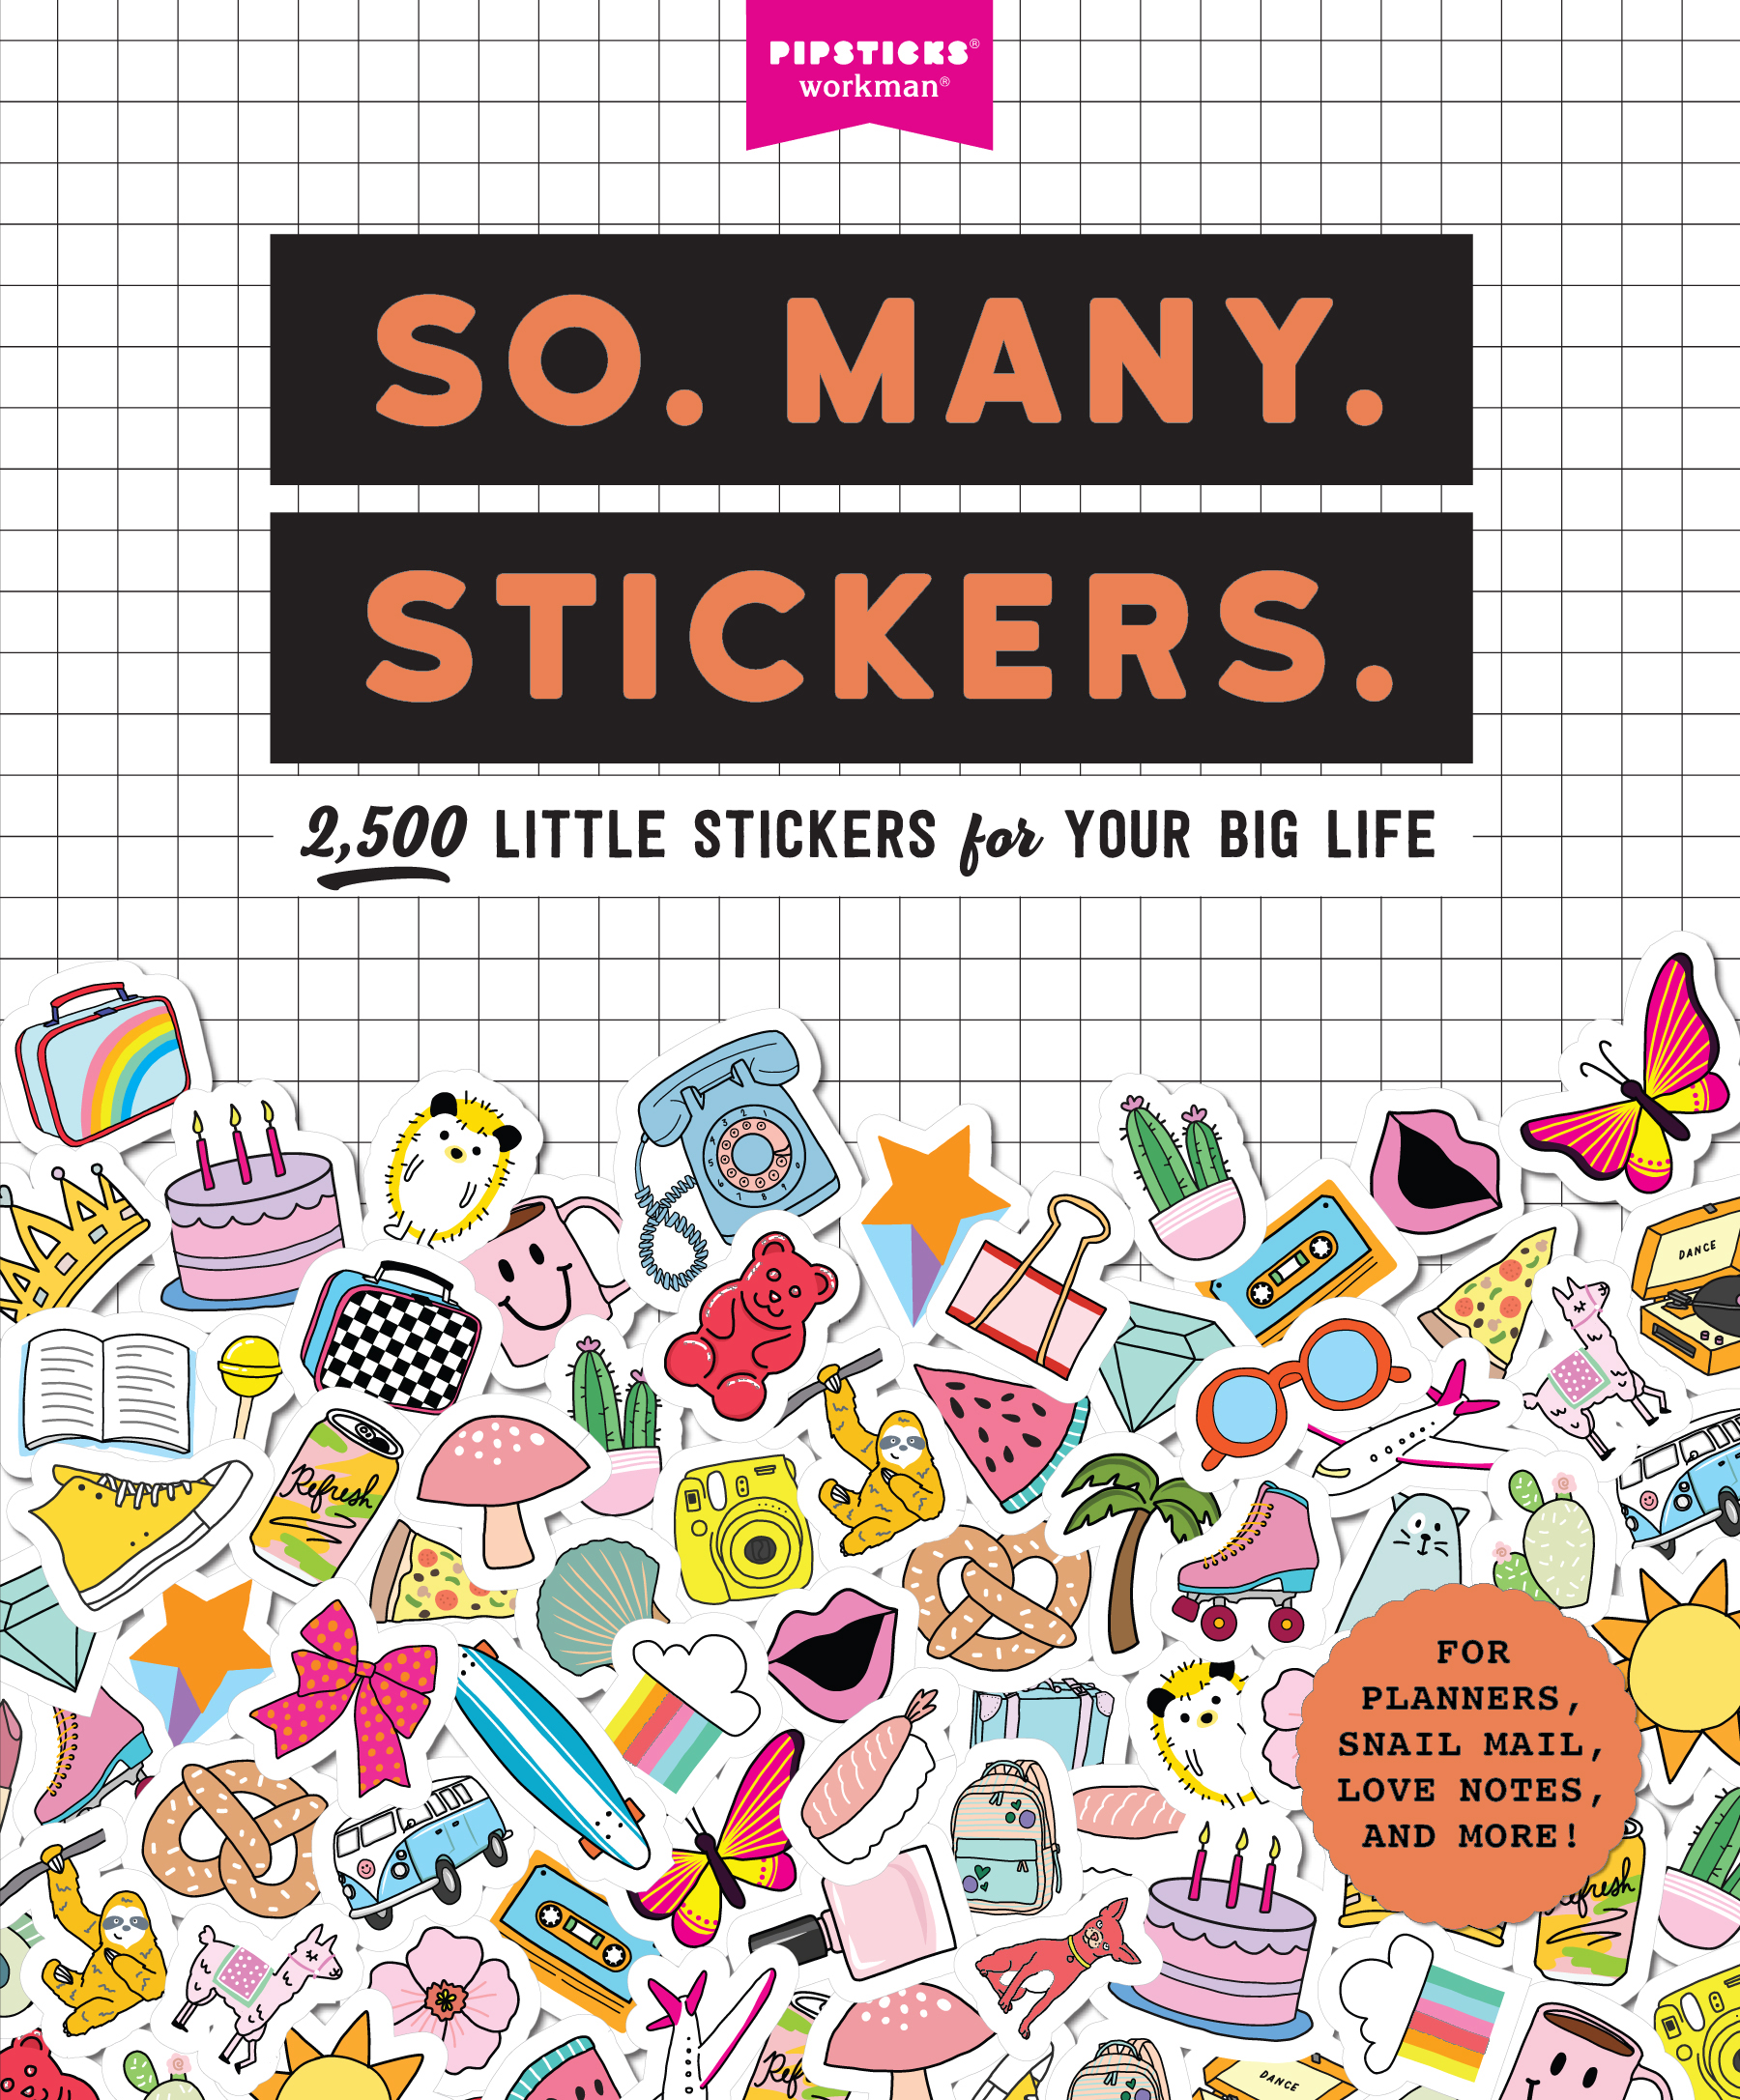 Pipsticks Sticker Club Reviews: Everything You Need To Know